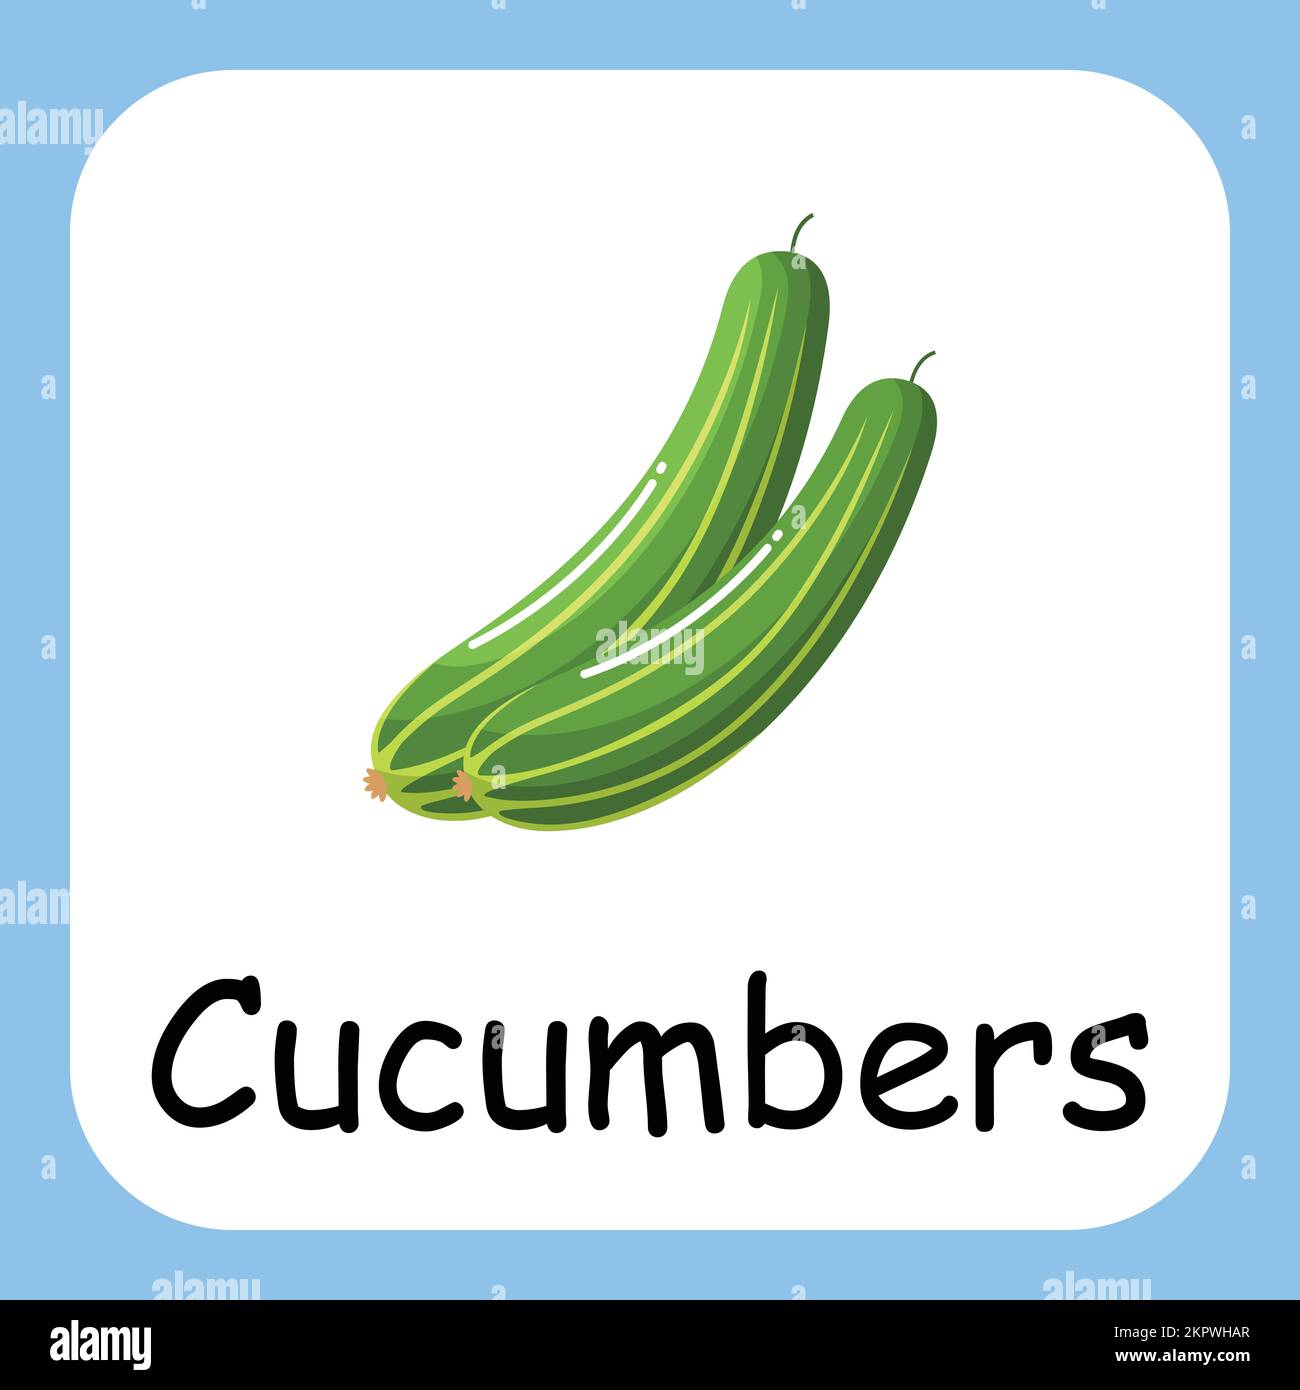 Cucumbers Clip Art, Illustration for Kids, cartoon fruit illustration Stock Vector